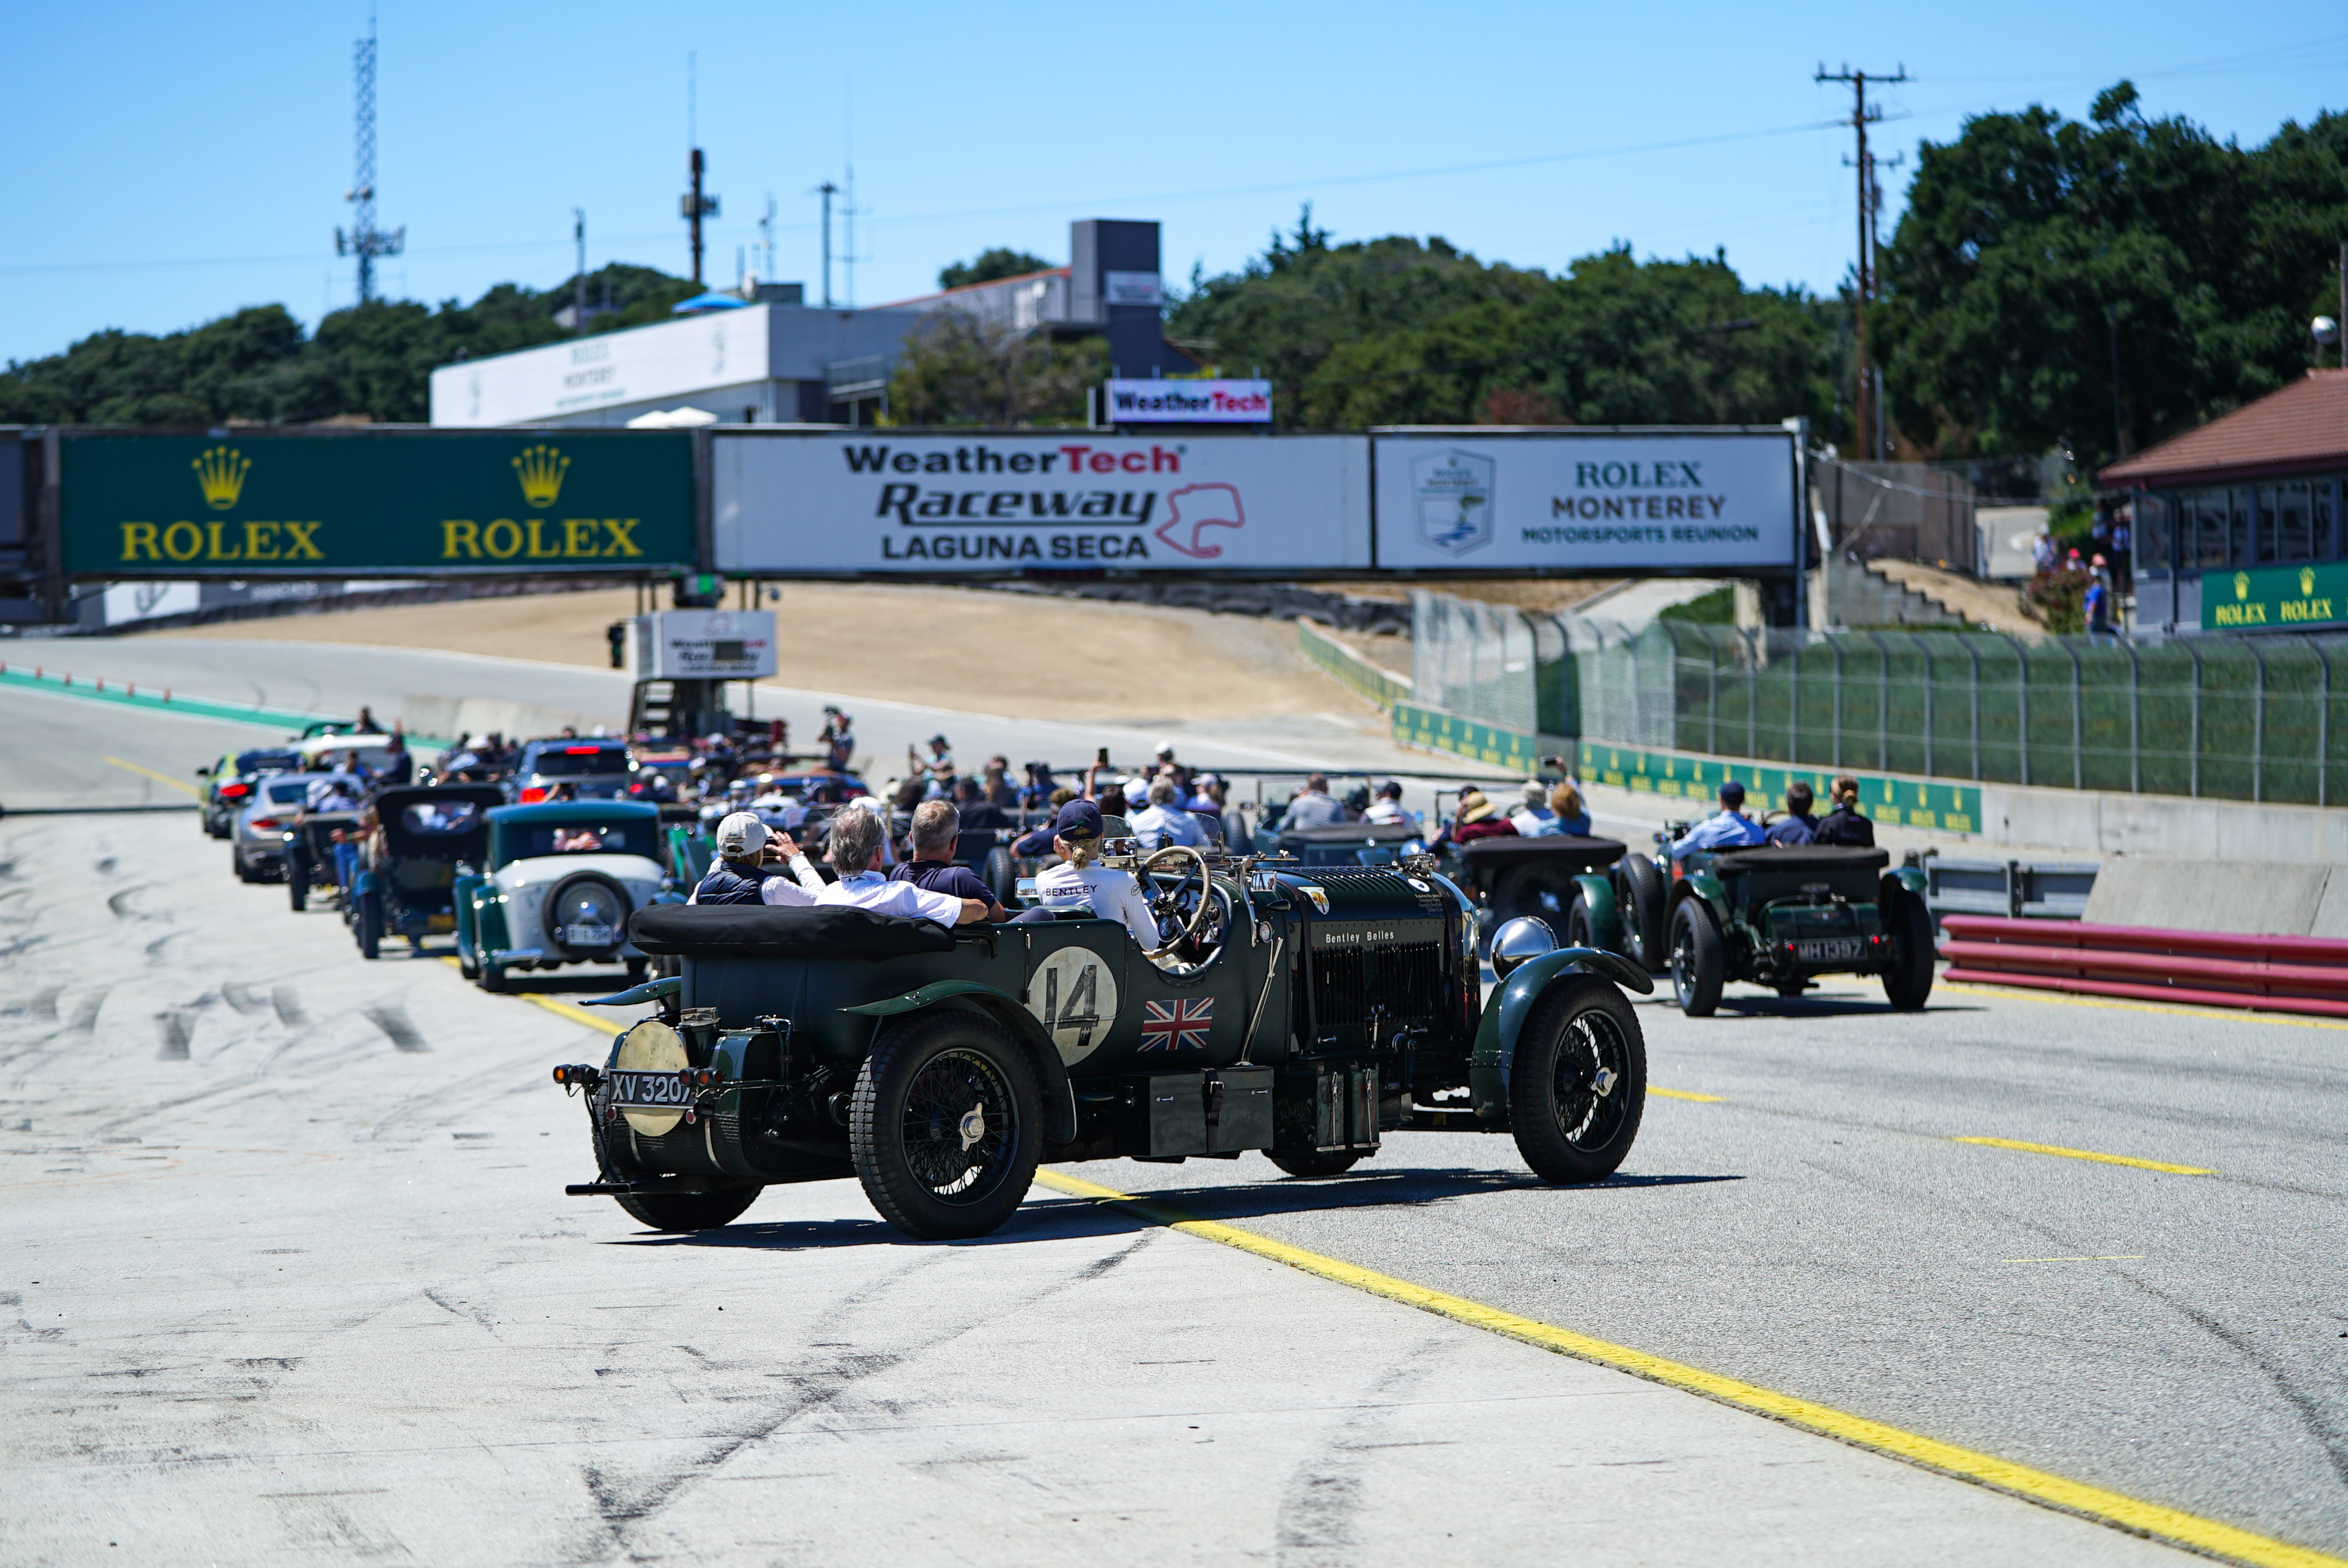 Bentley parade celebrating 100 years | Rebecca Nguyen photos